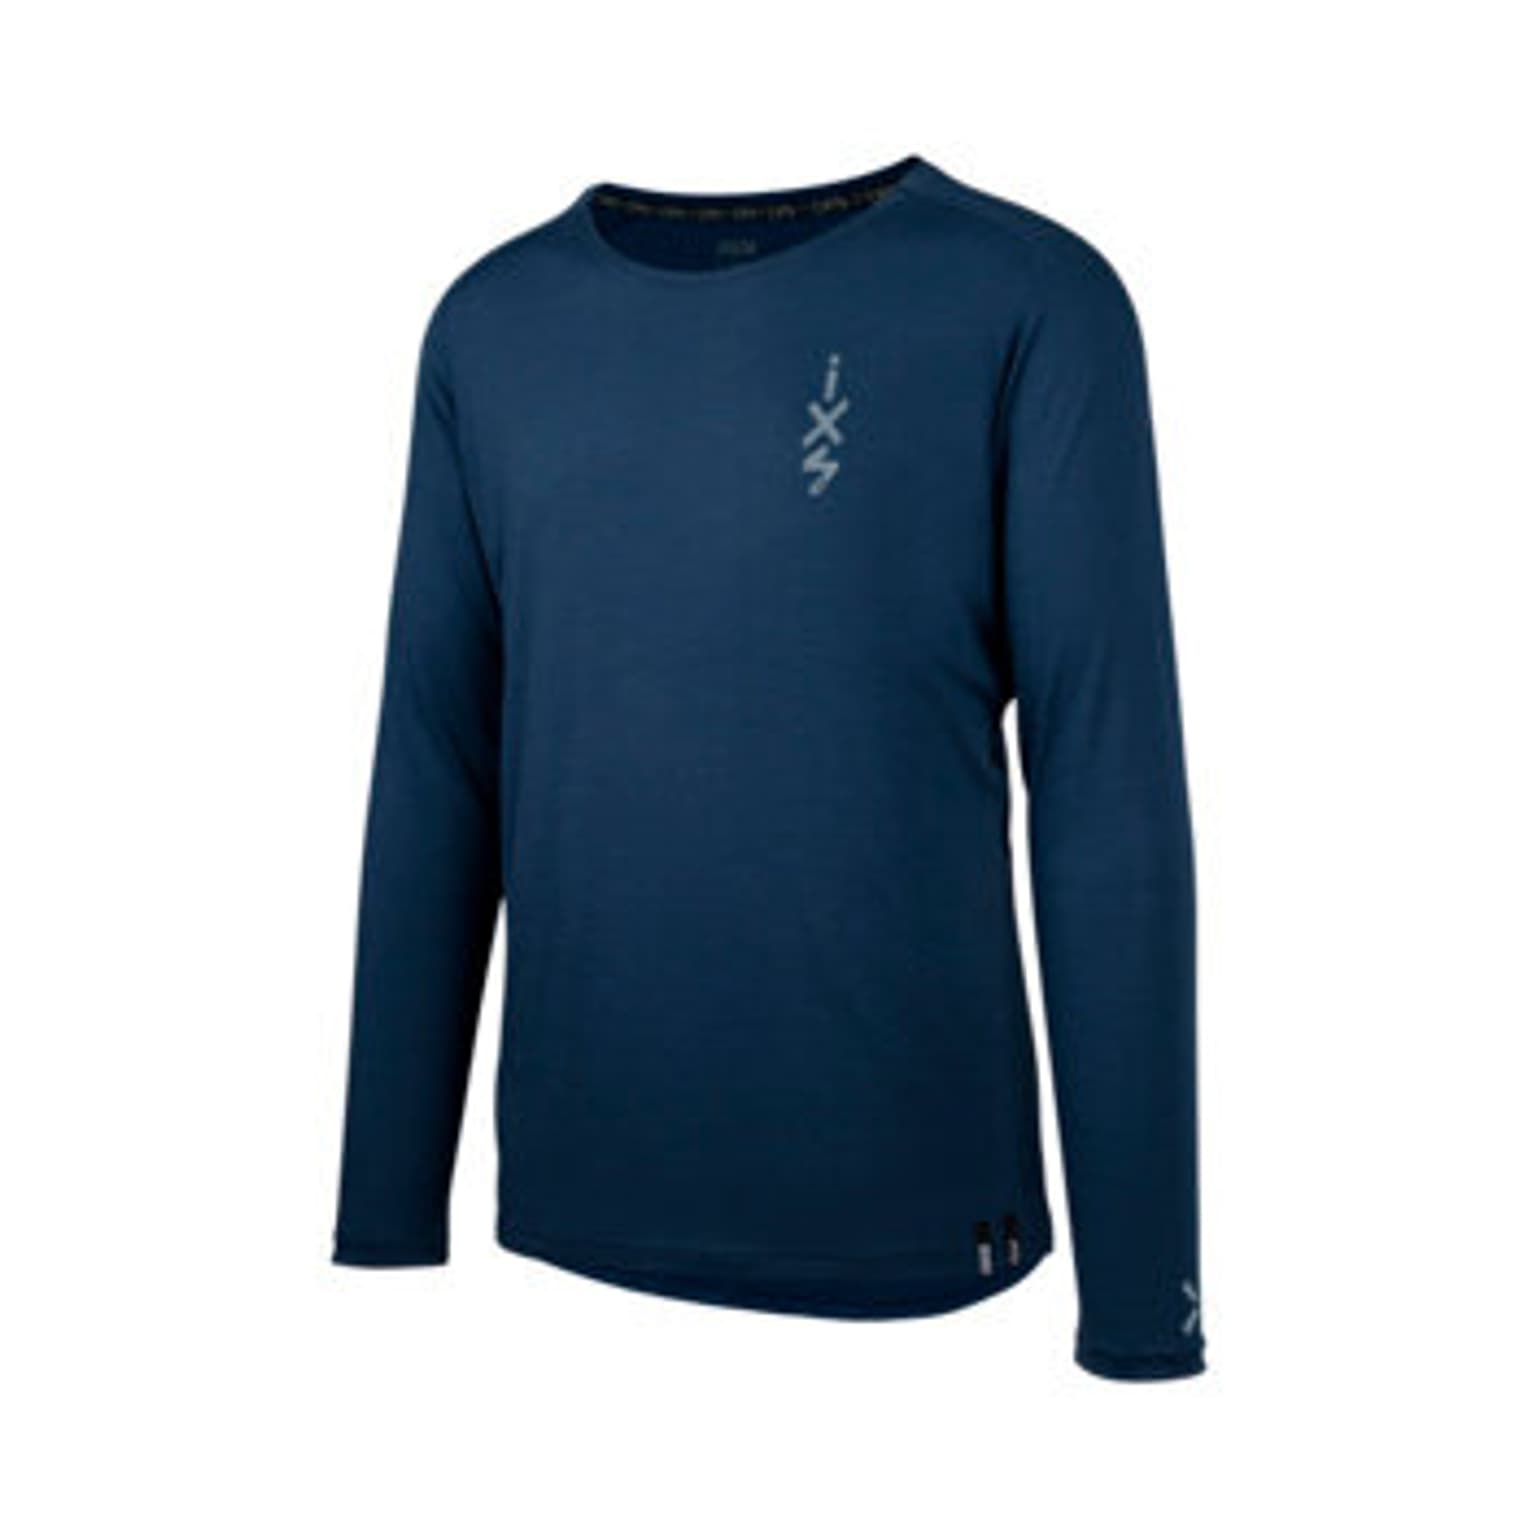 iXS Flow Merino long sleeve jersey Maglia a maniche lunghe blu-marino 1